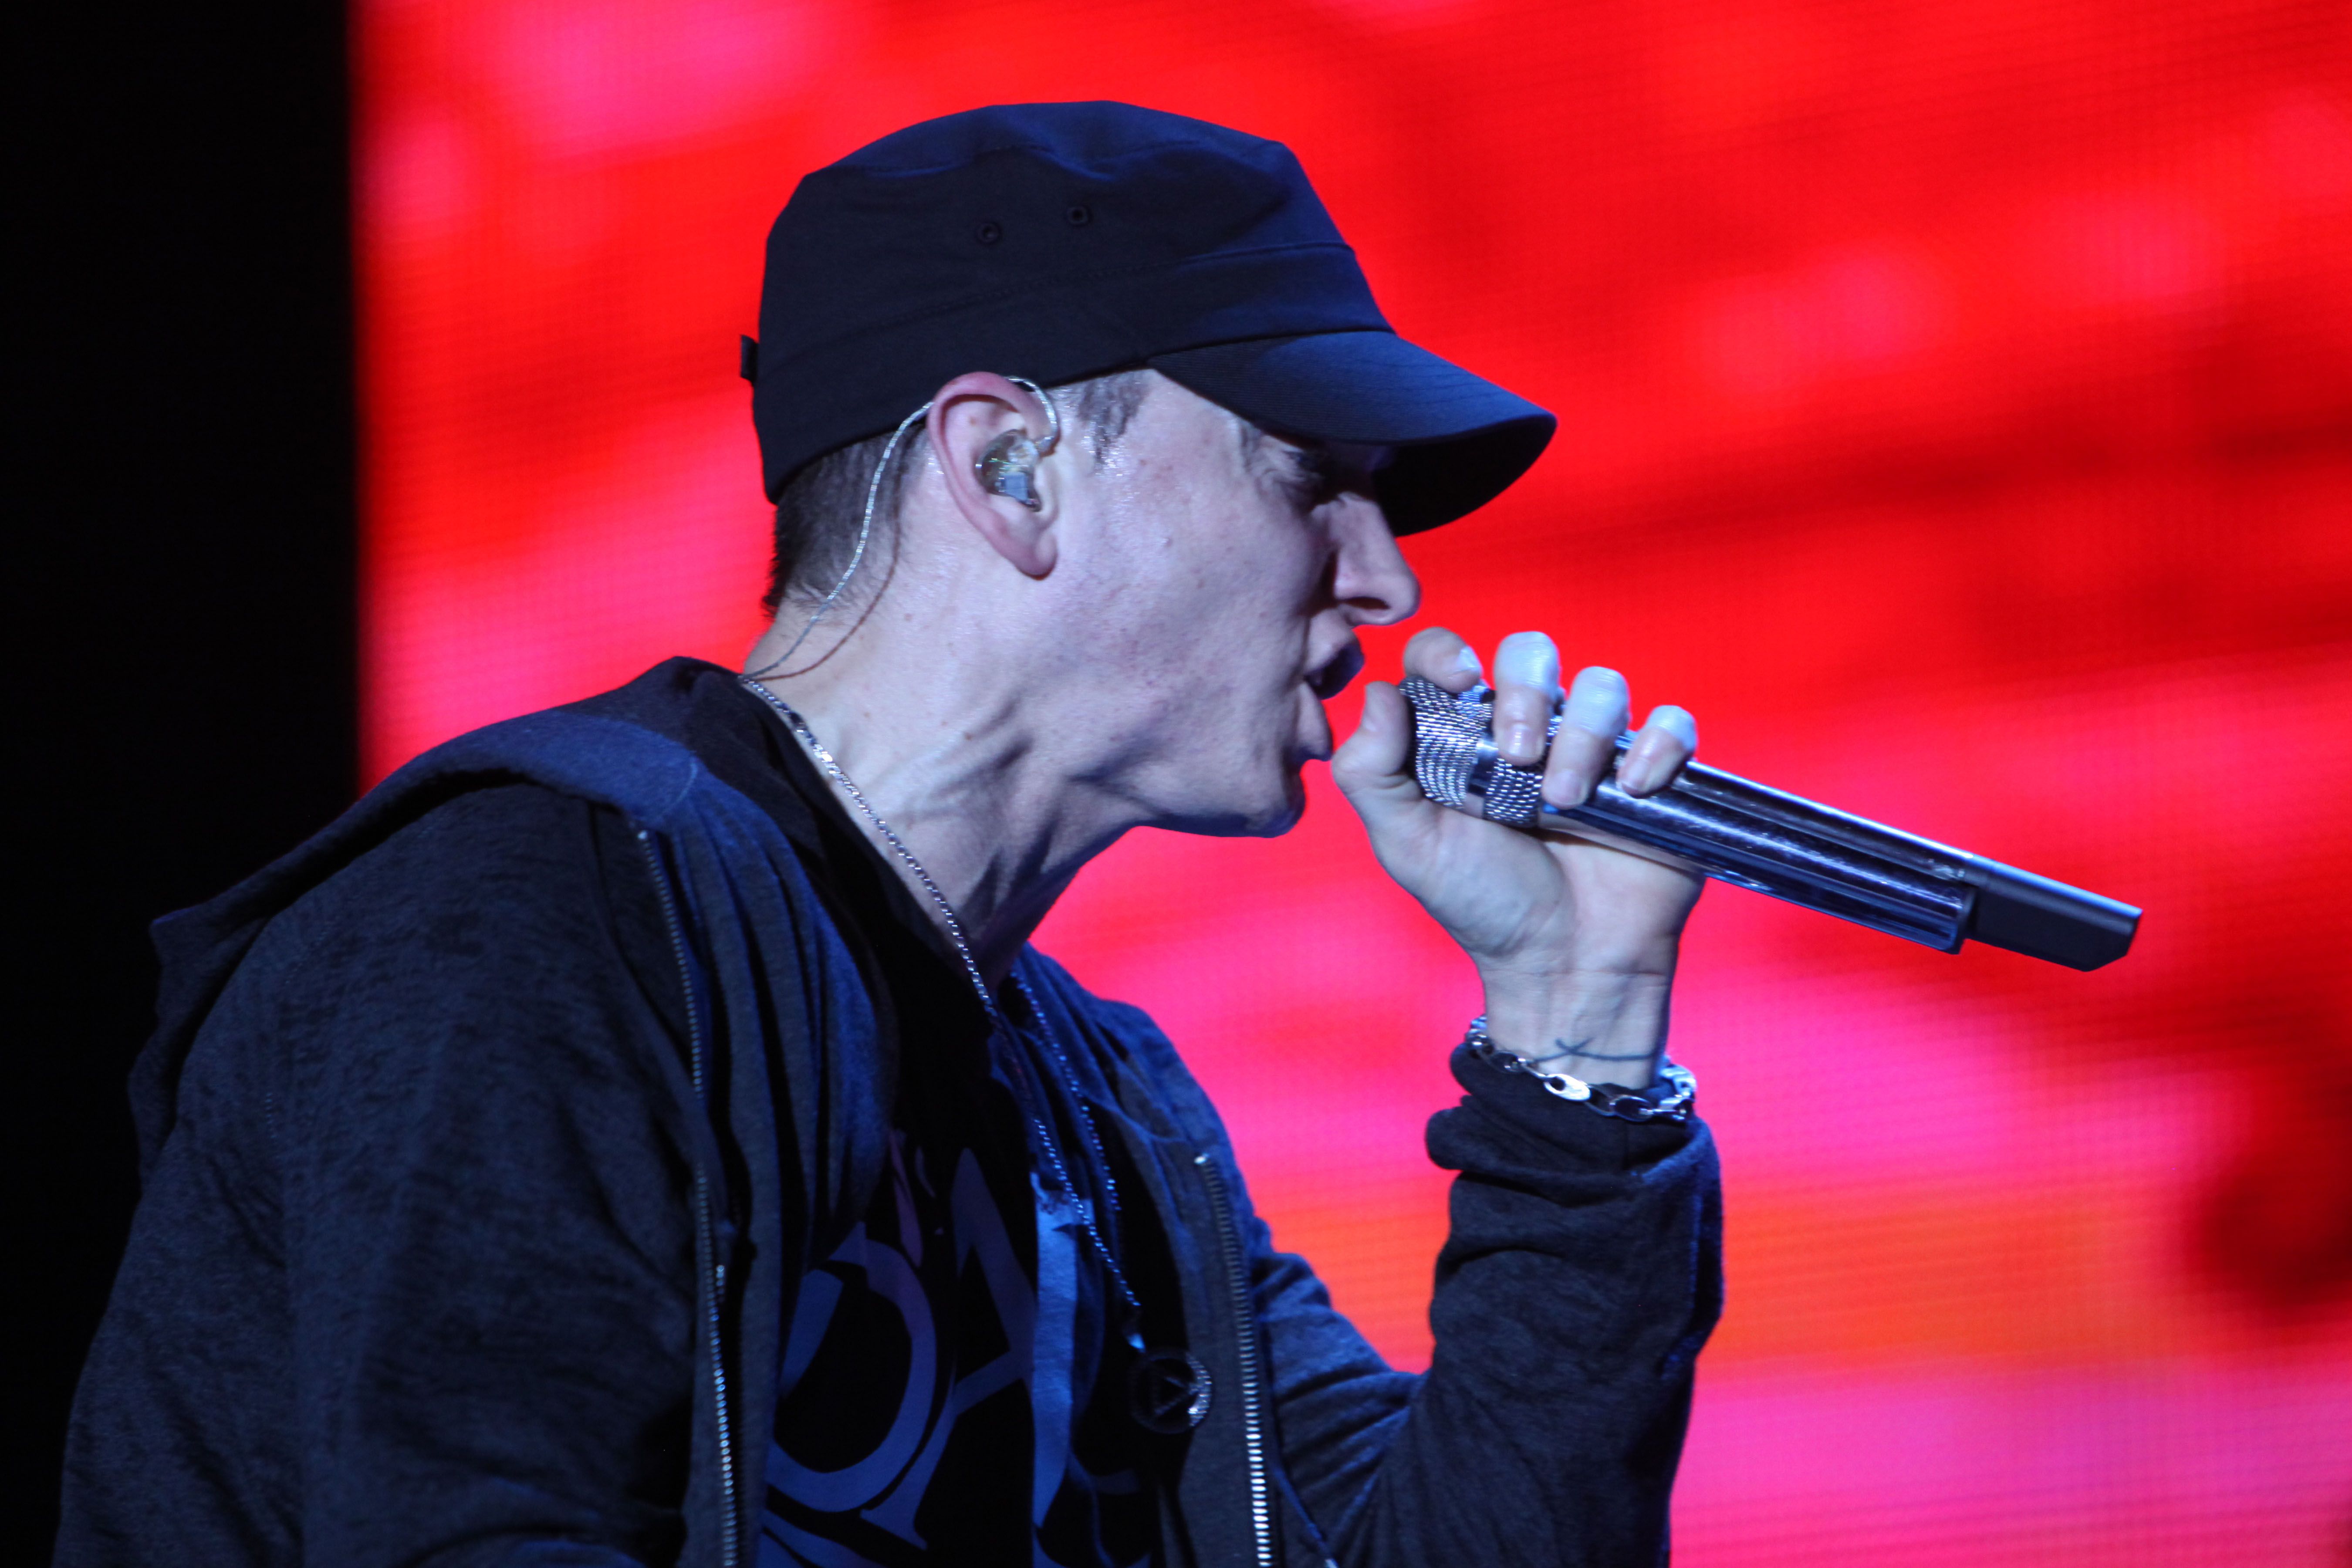 Eminem at the 2011 Bonnaroo Music Festival - Day 3